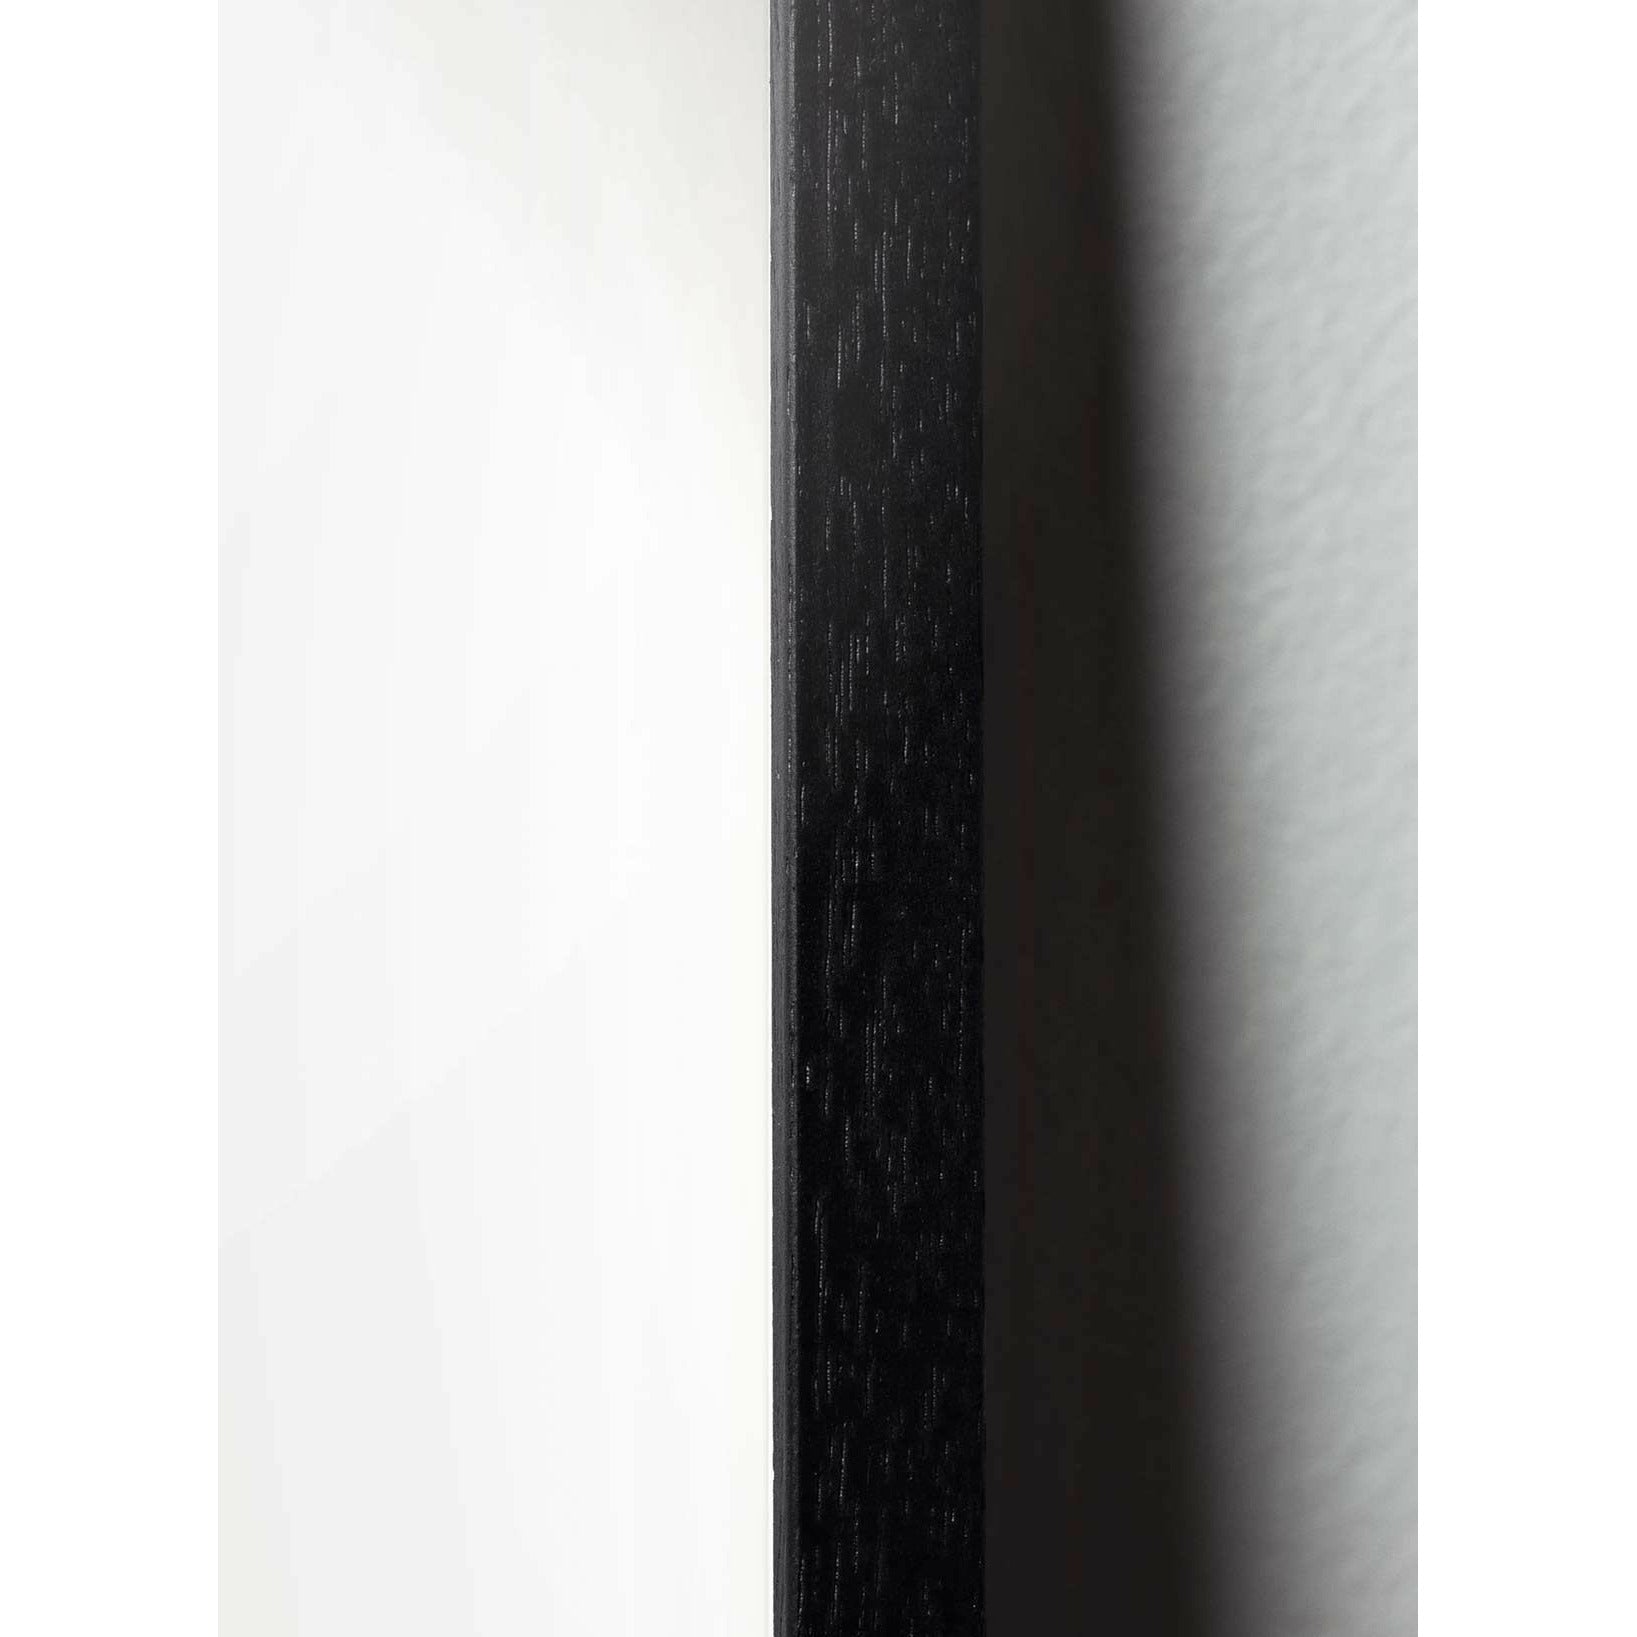 Póster clásico de BrainChild Flowerpot, marco en madera lacada negra de 30x40 cm, fondo negro